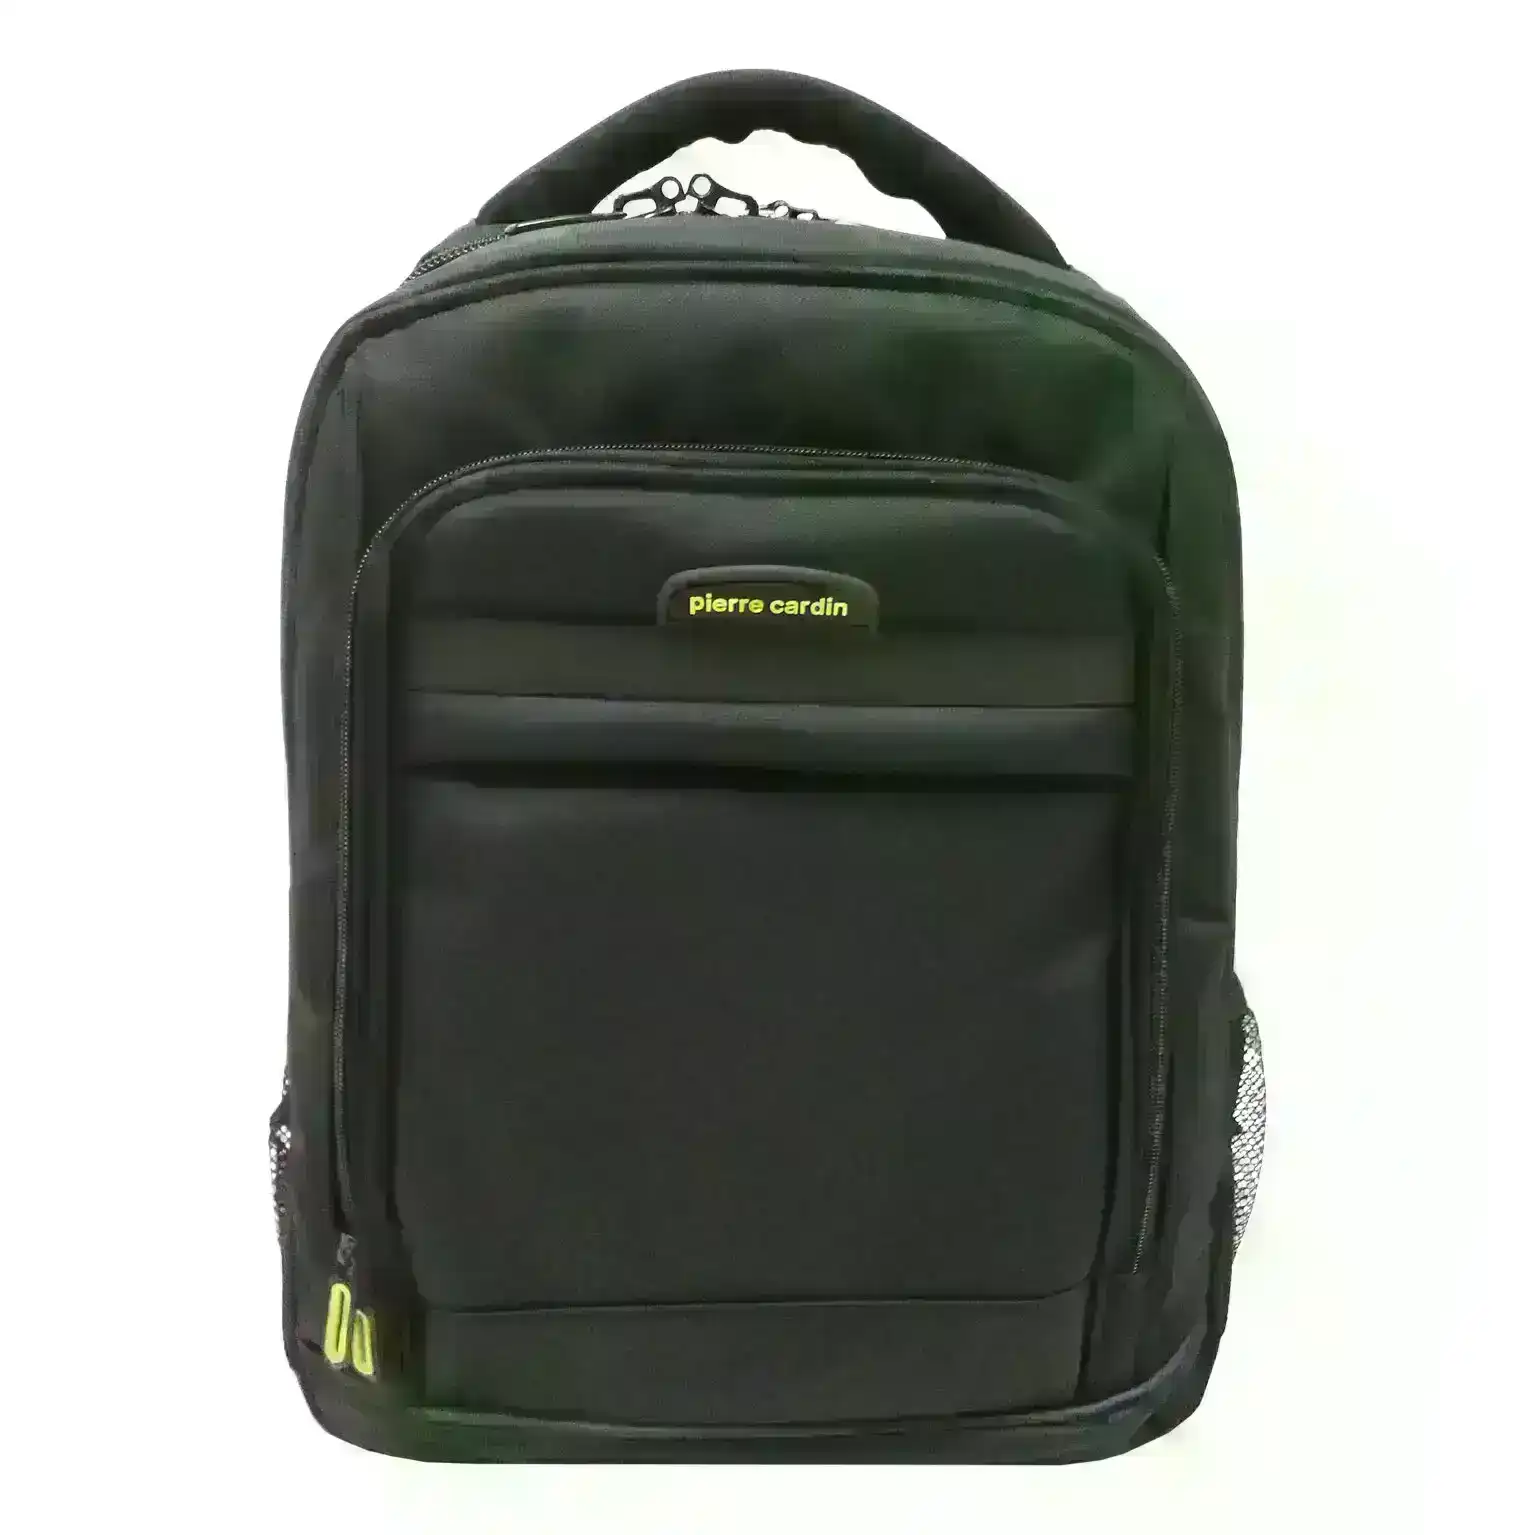 43L Pierre Cardin Business Backpack Bag Travel w Laptop Sleeve RFID Protection - Black